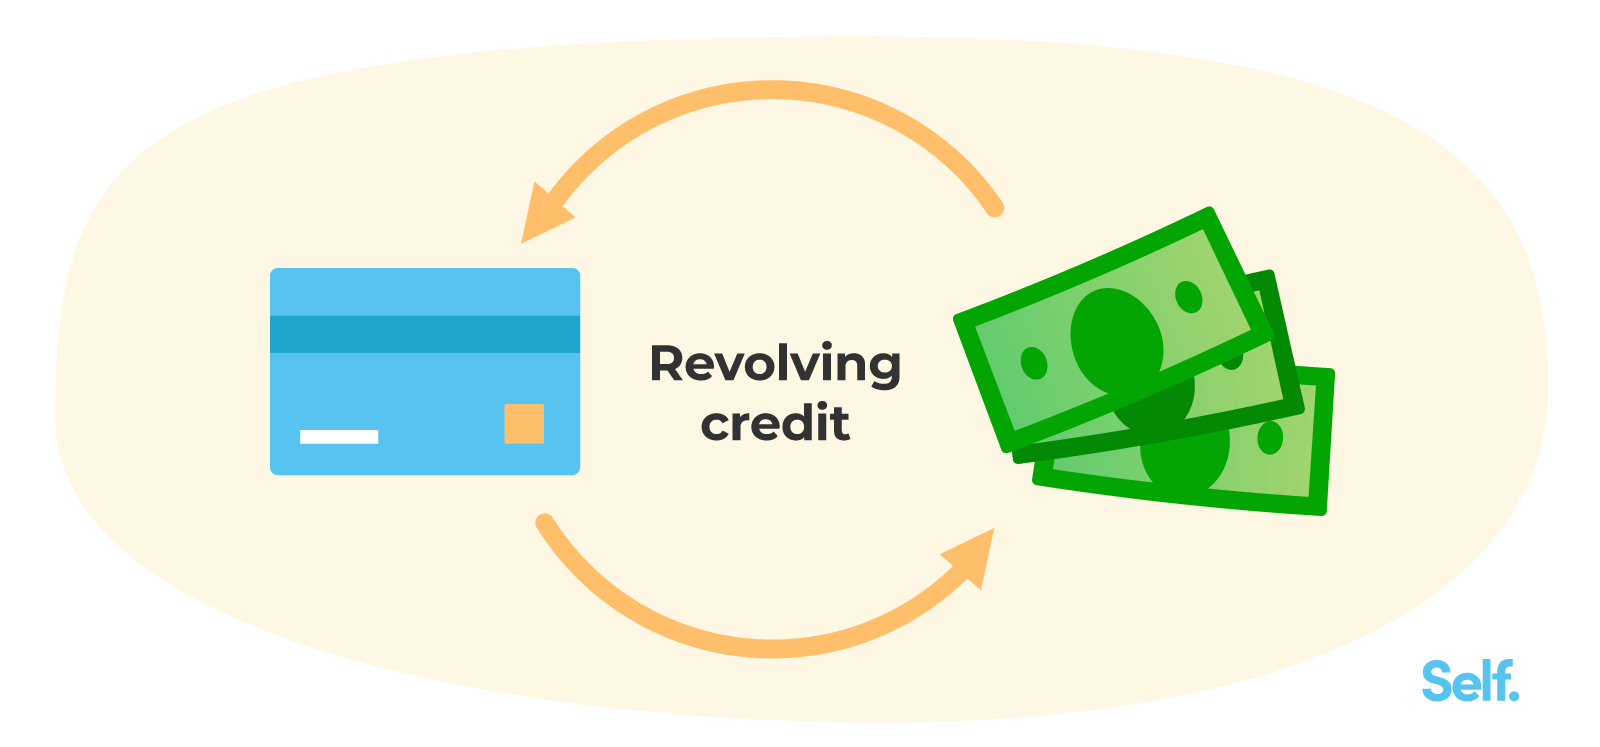 01-Revolving credit